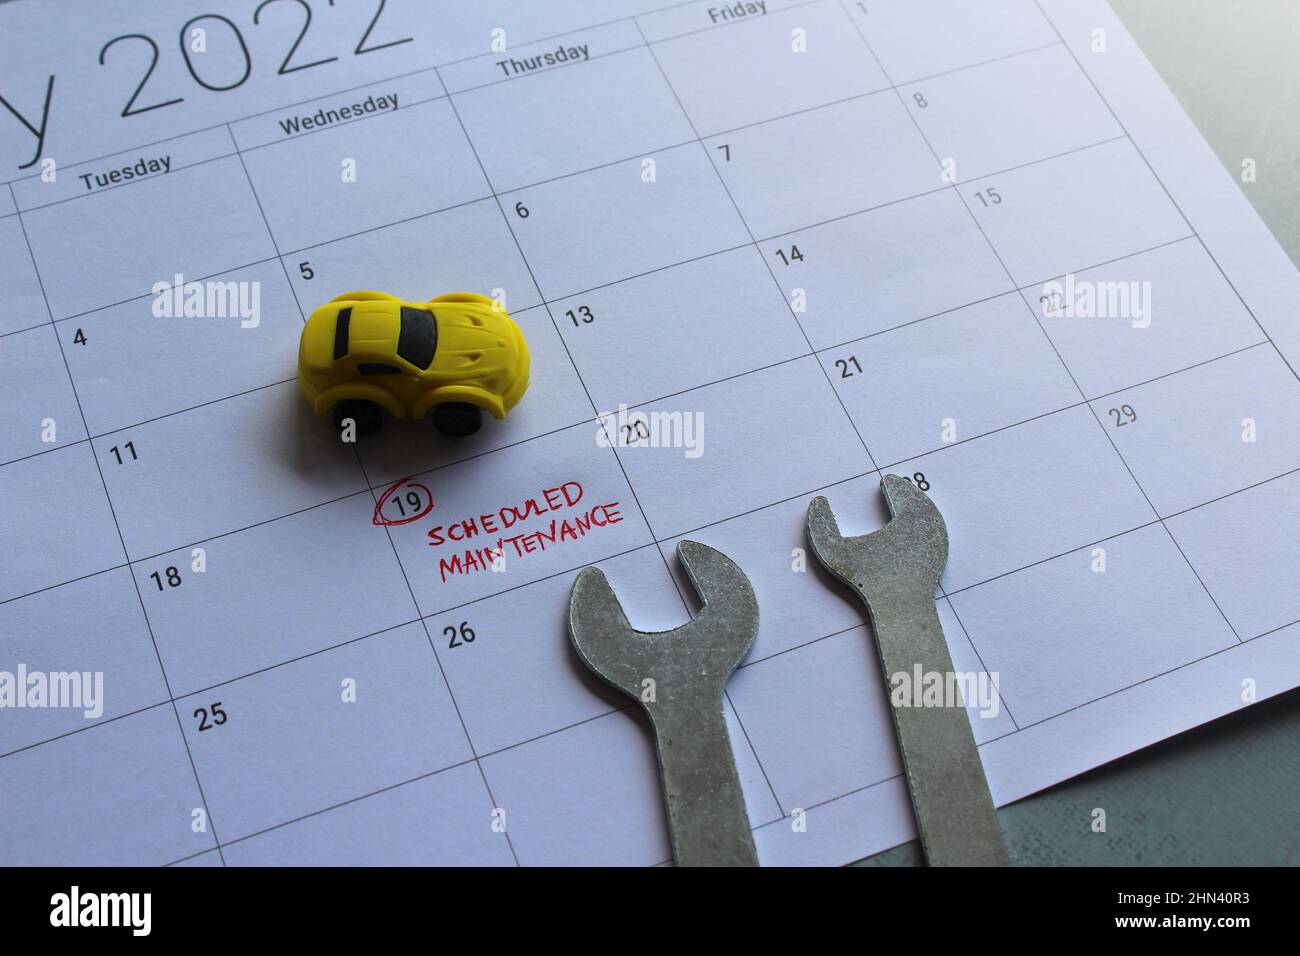 Car scheduled maintenance concept. Toy car, spanner and calendar with text SCHEDULED MAINTENANCE Stock Photo